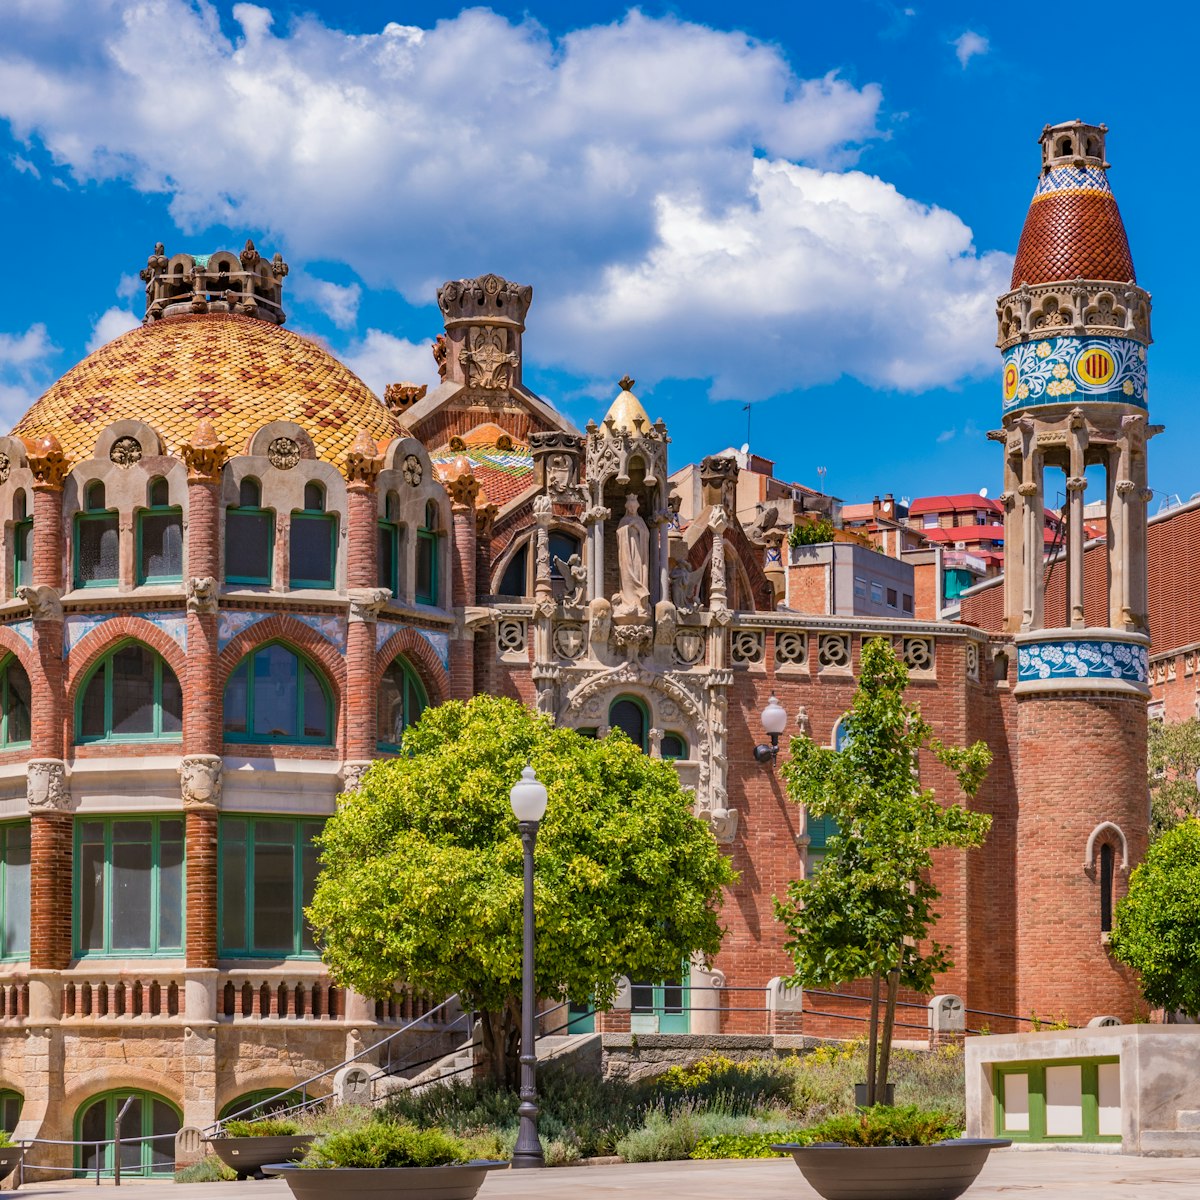 Hospital de Sant Pau in Barcelona, Spain - A UNESCO World Heritage Site.